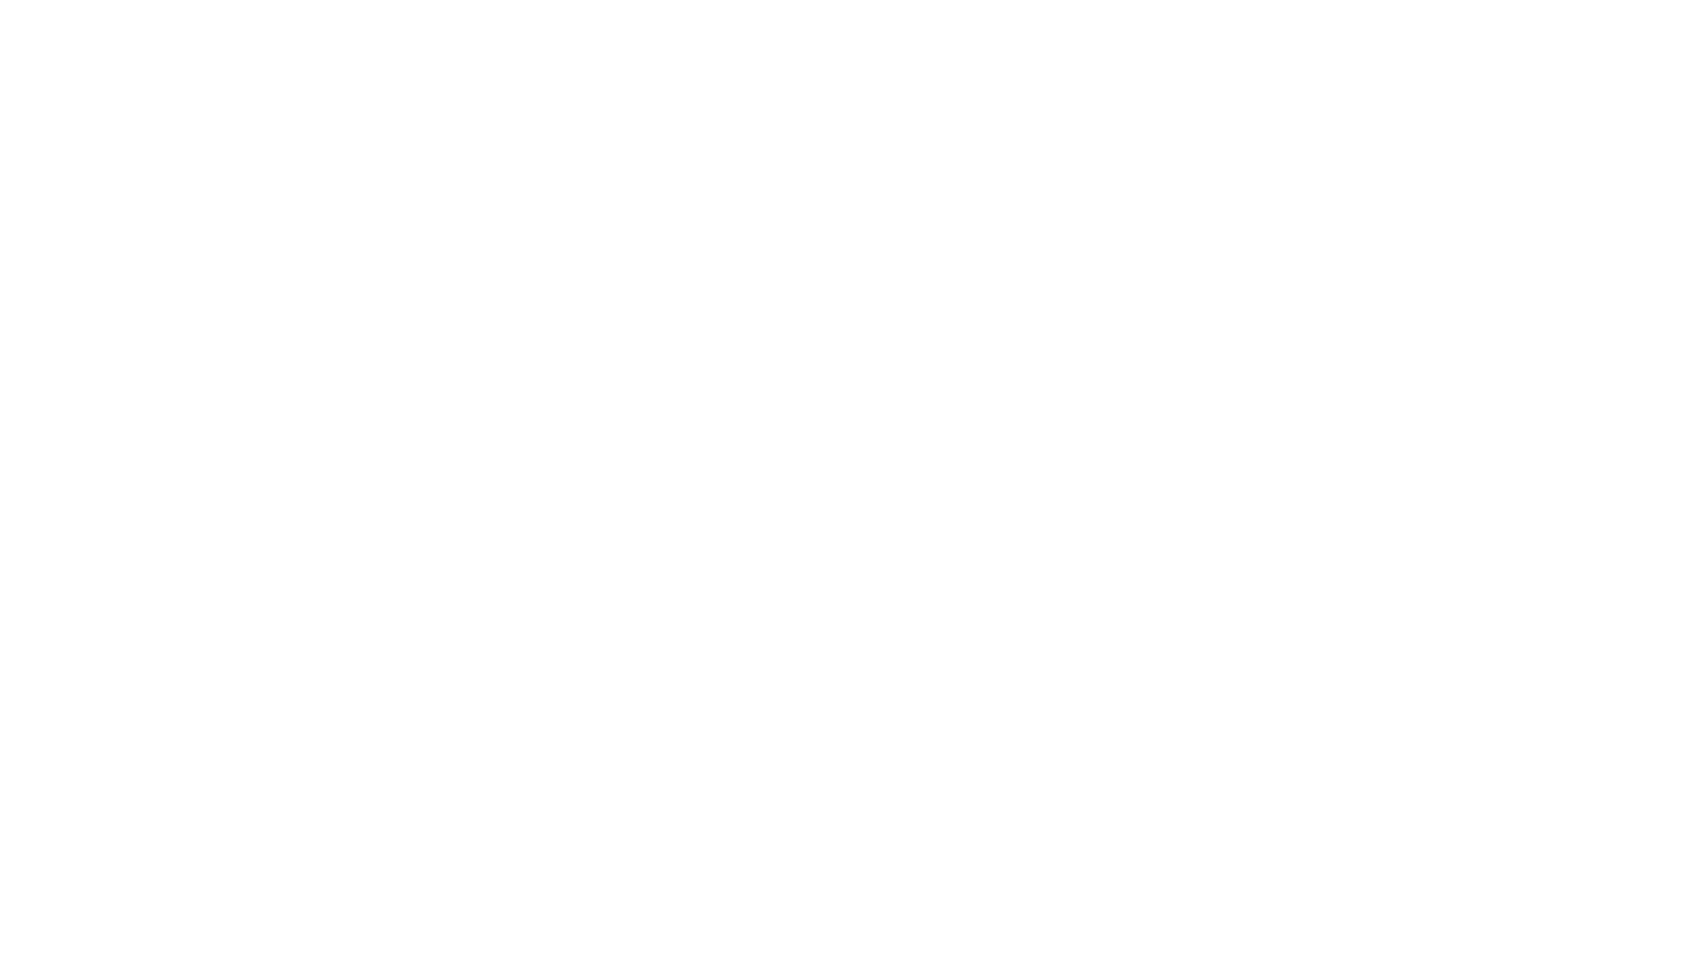 directv for business authorized dealer logo